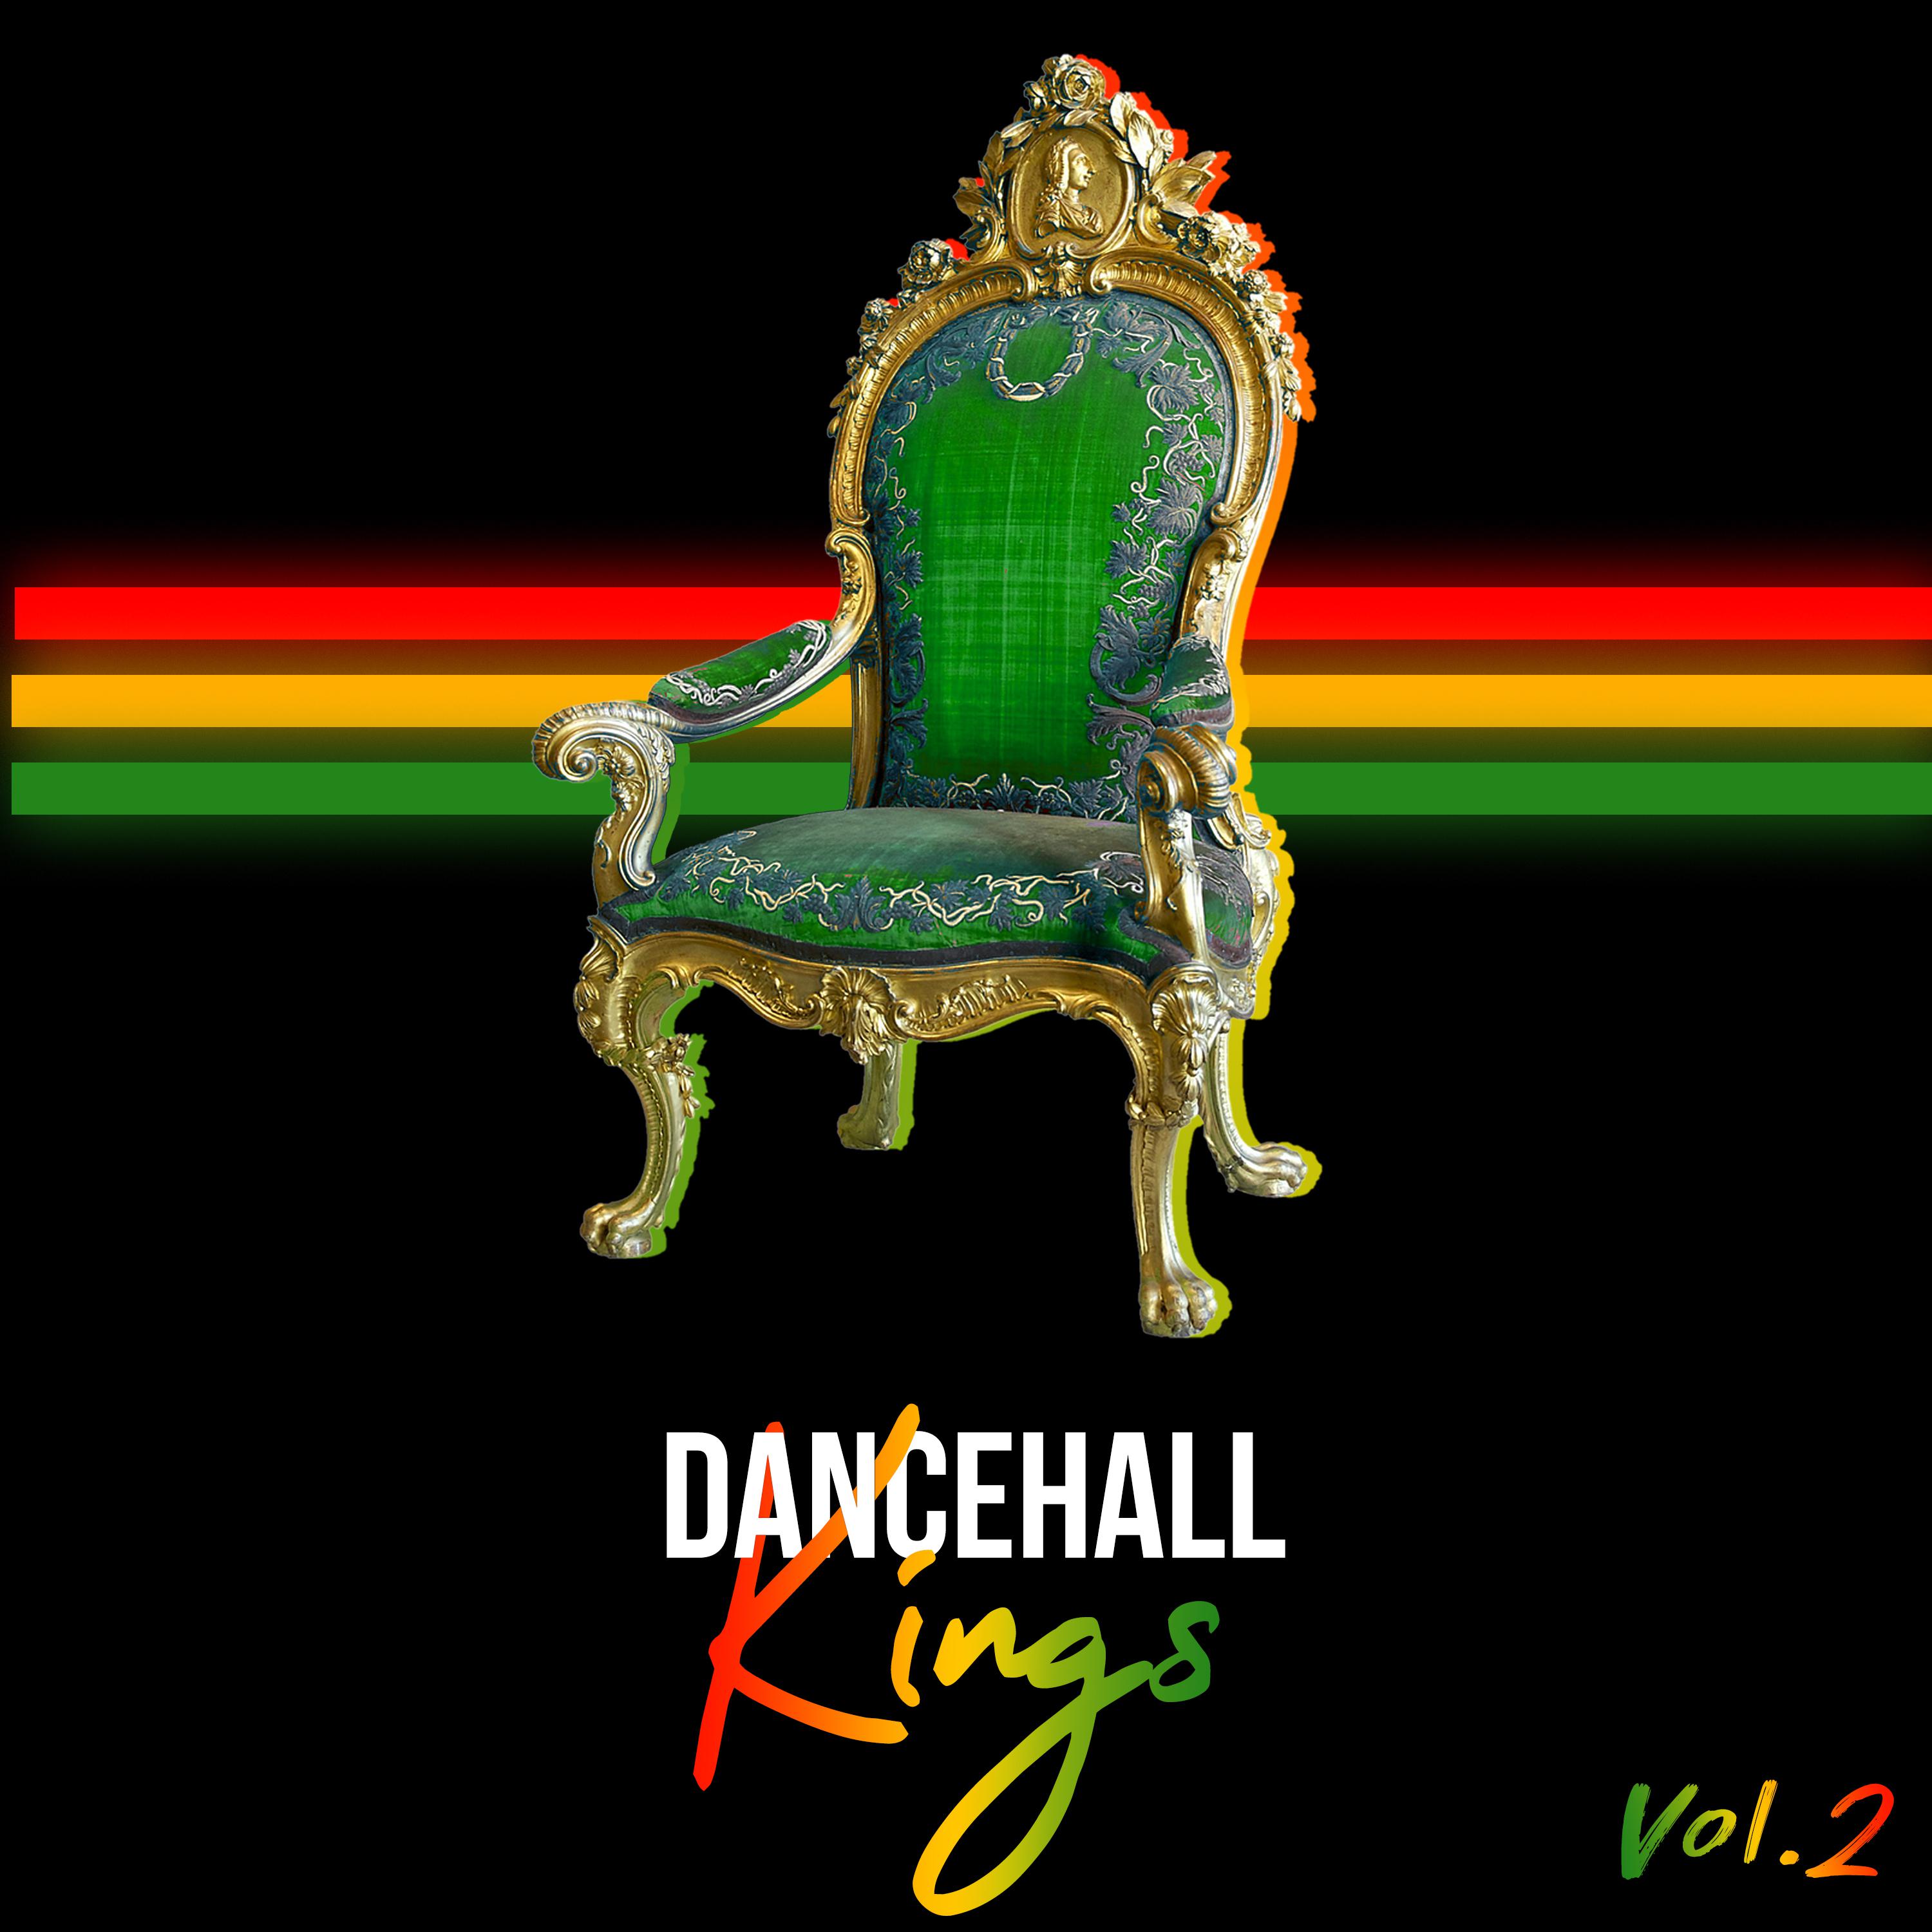 Dancehall Kings, Vol. 2